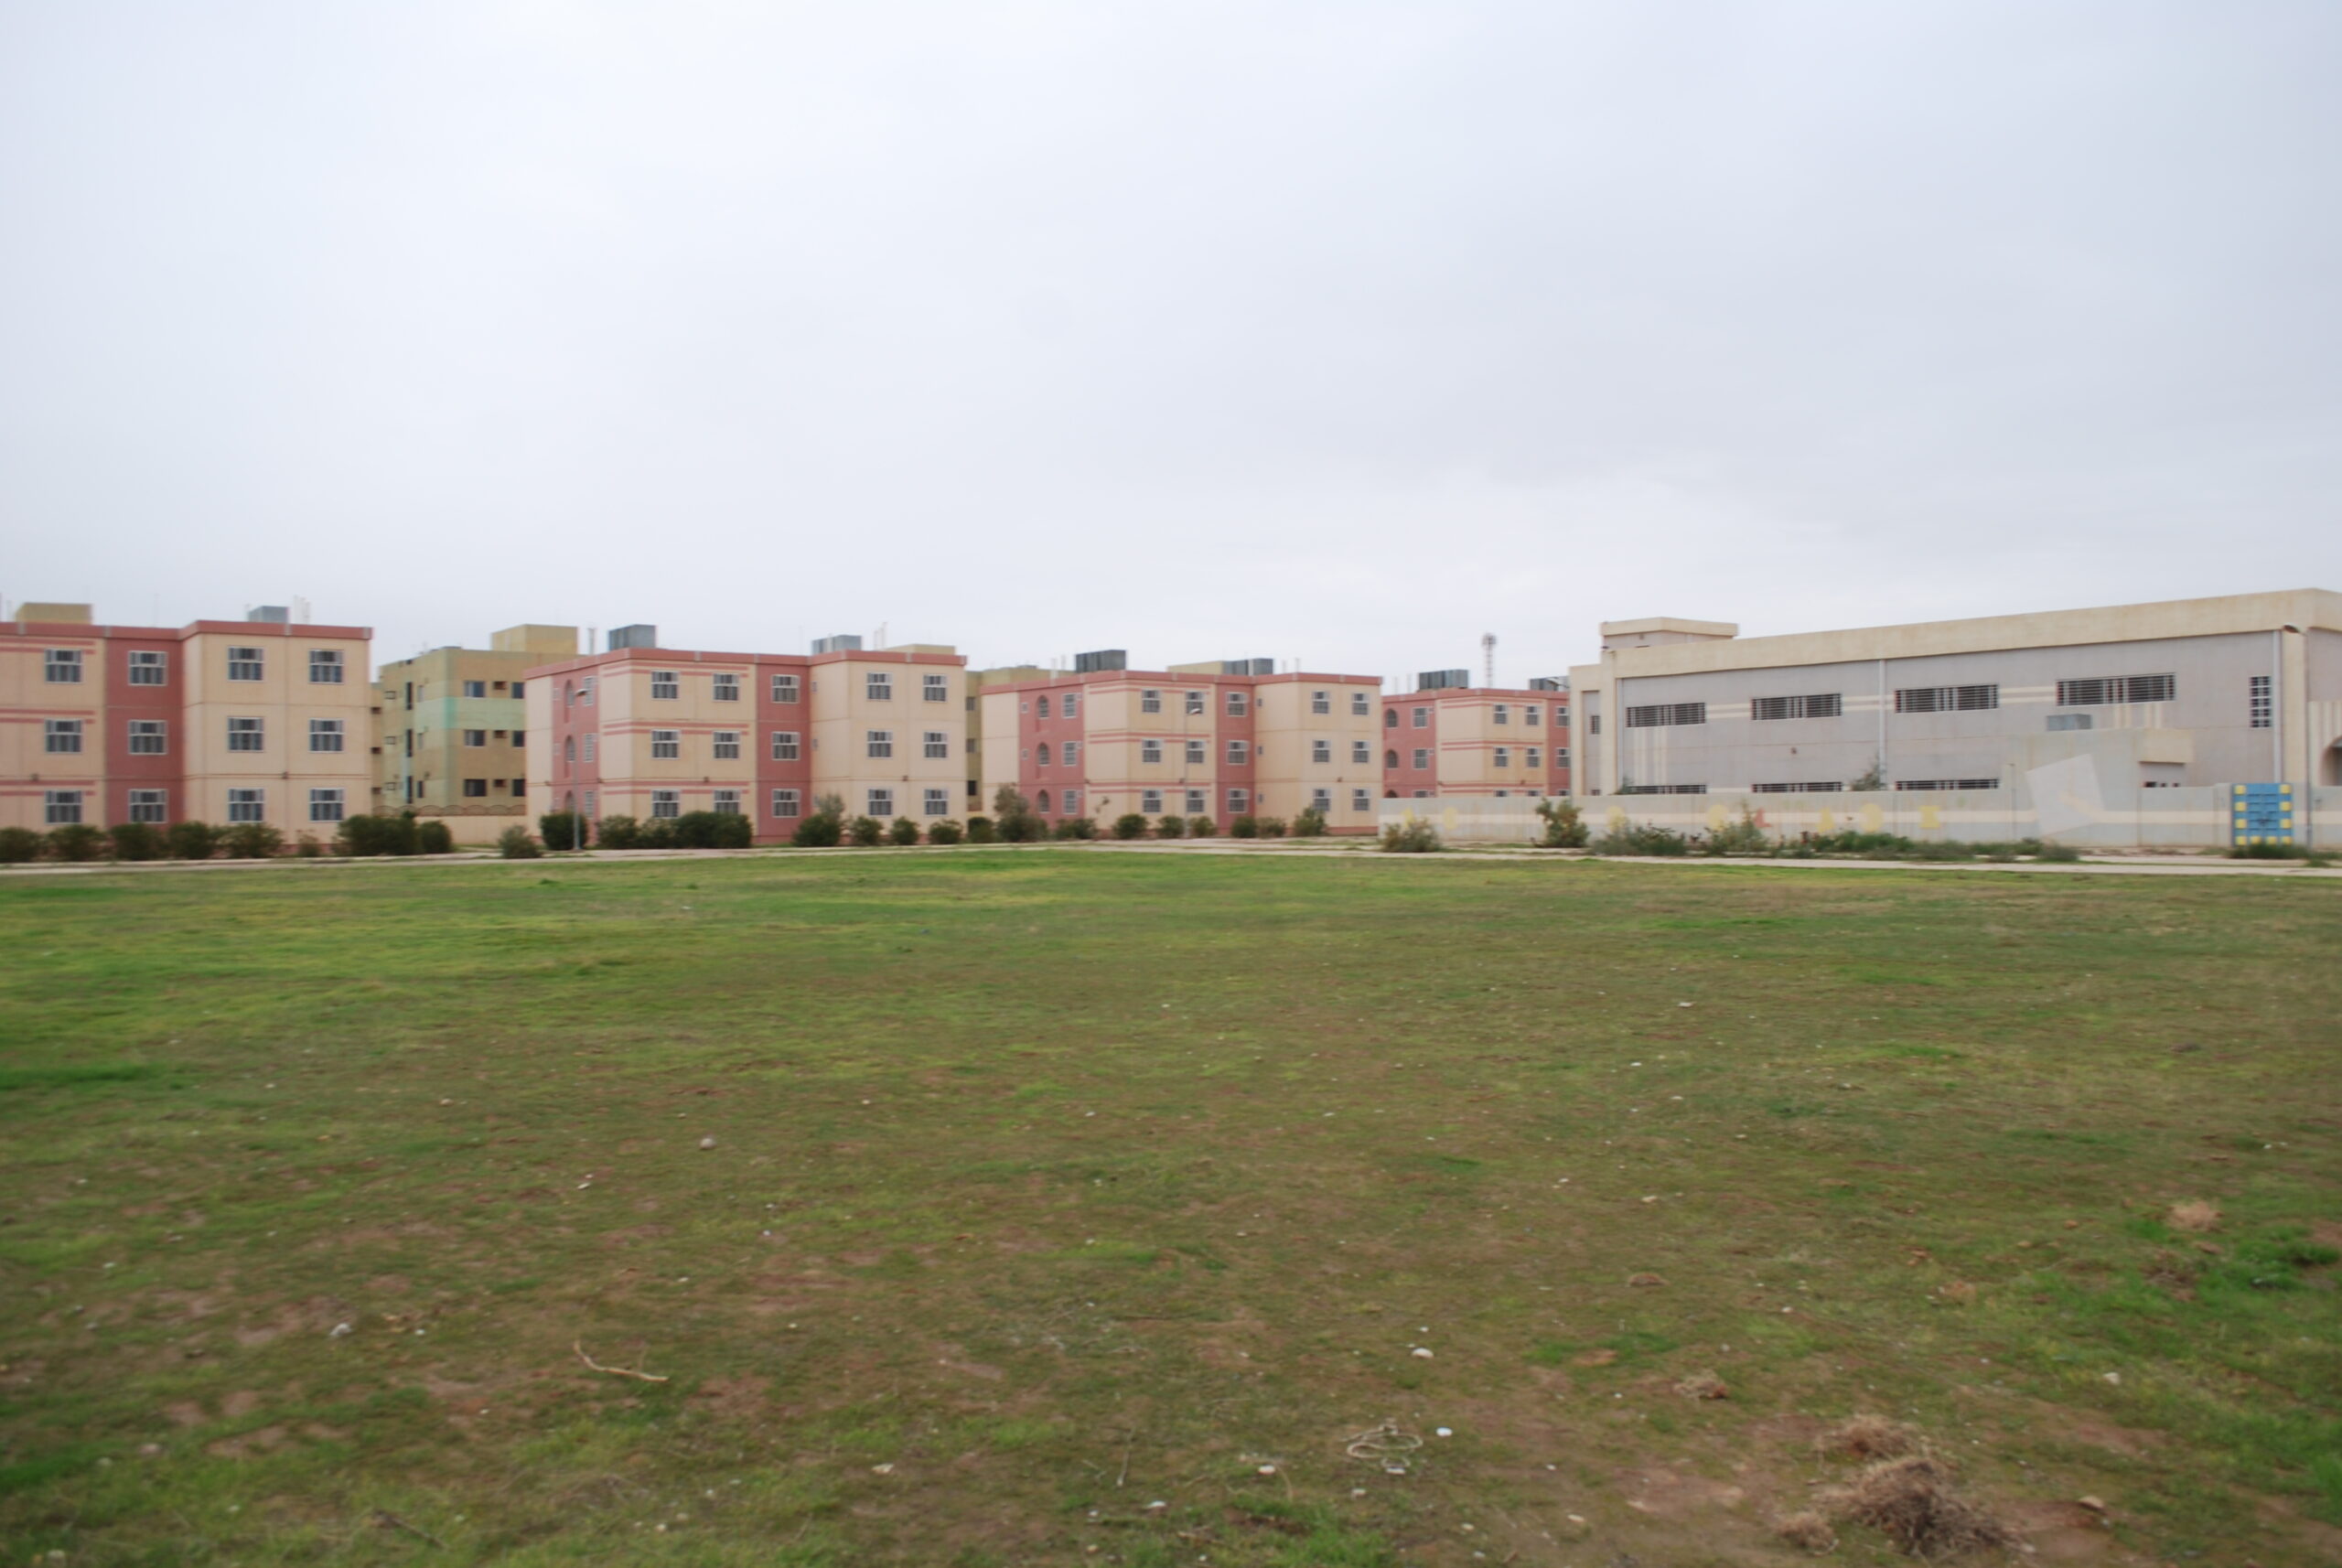 Residential complex in Kirkuk/Bingeh Ali